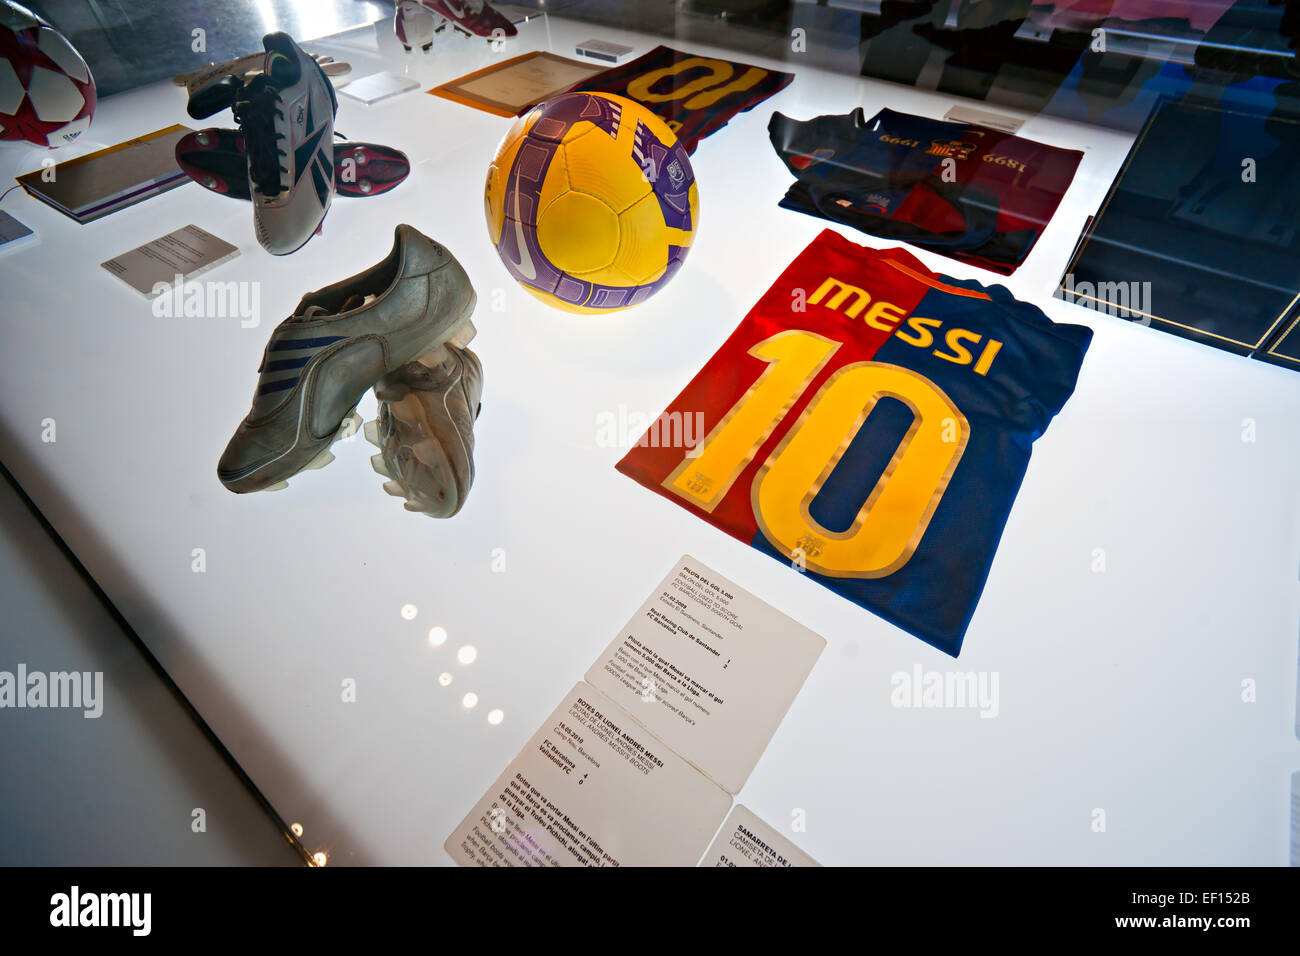 BARCELONA - Spanien, Dezember 19: Der FC Barcelona Museum eingeweiht am 24 September 1984.The Museum nimmt 3.500 Quadratmeter Stockfoto